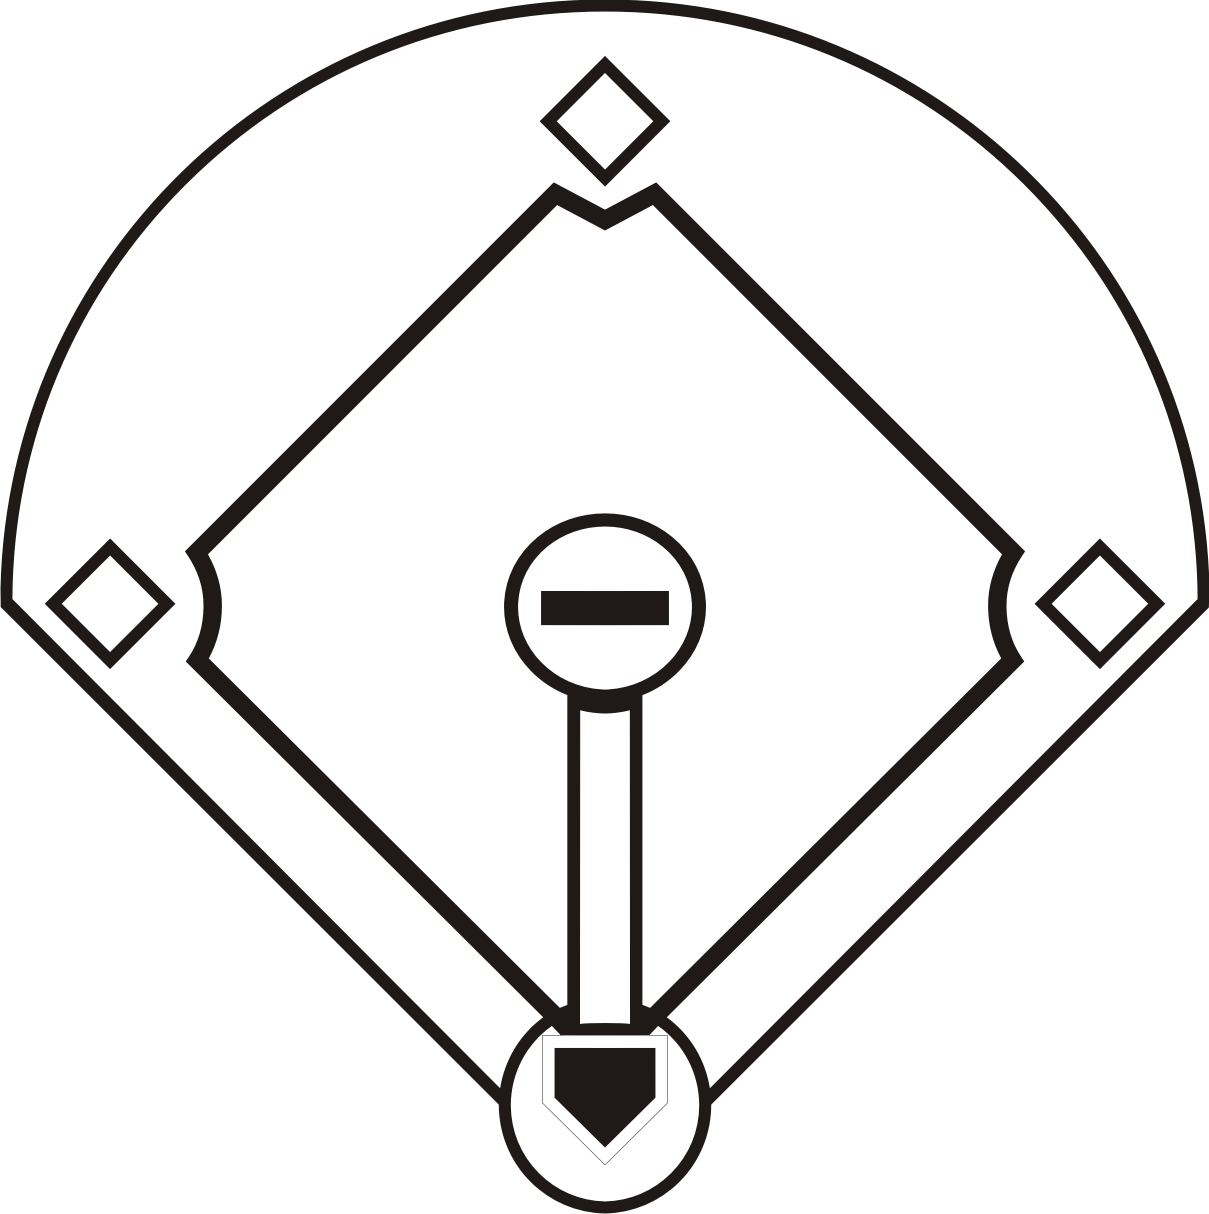 Baseball Diamond Diagram